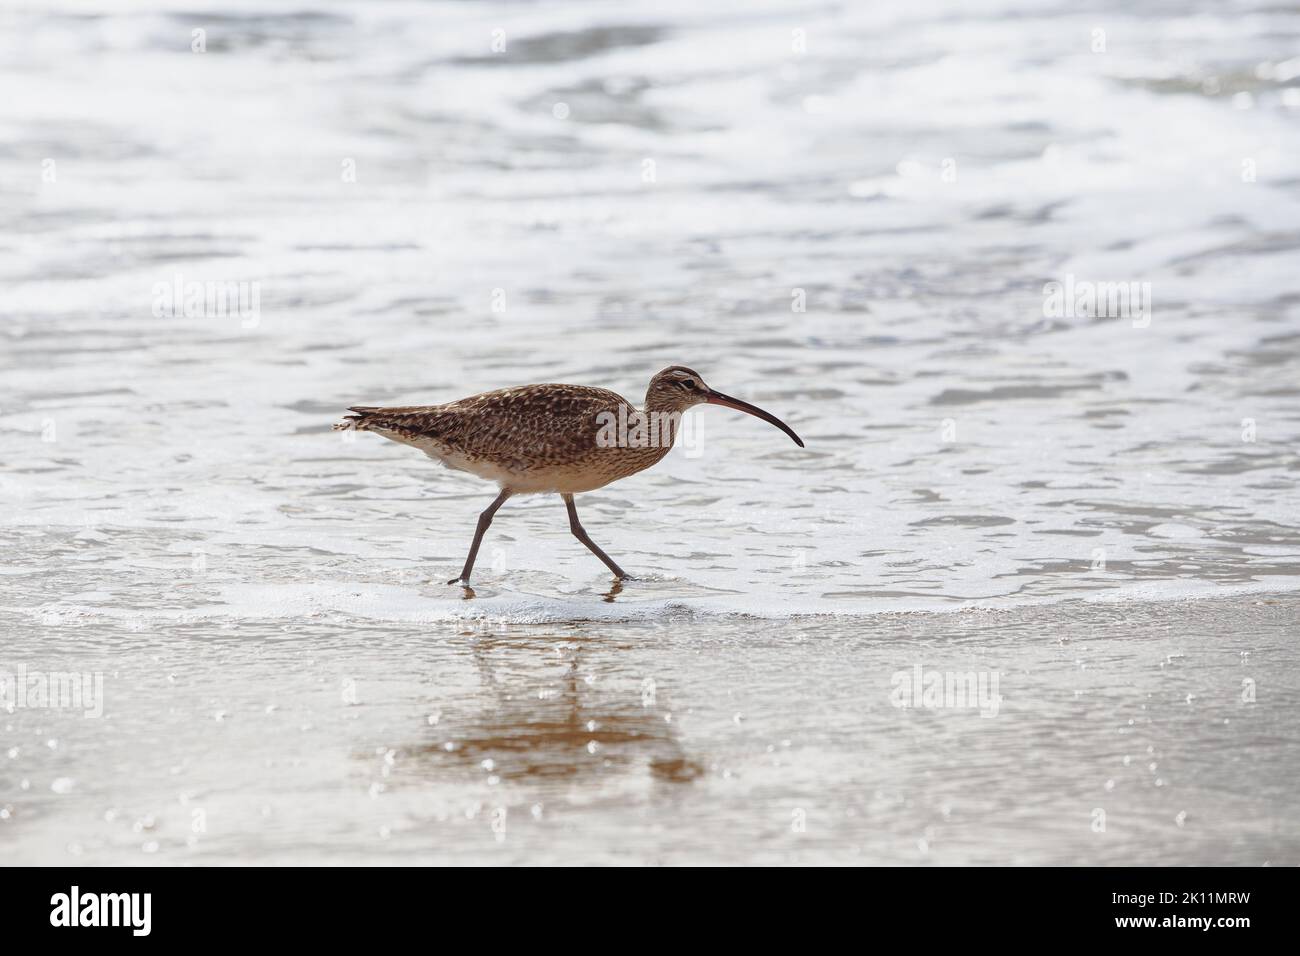 Marbled godwit shorebird walking in shallow water on sunny beach Stock Photo